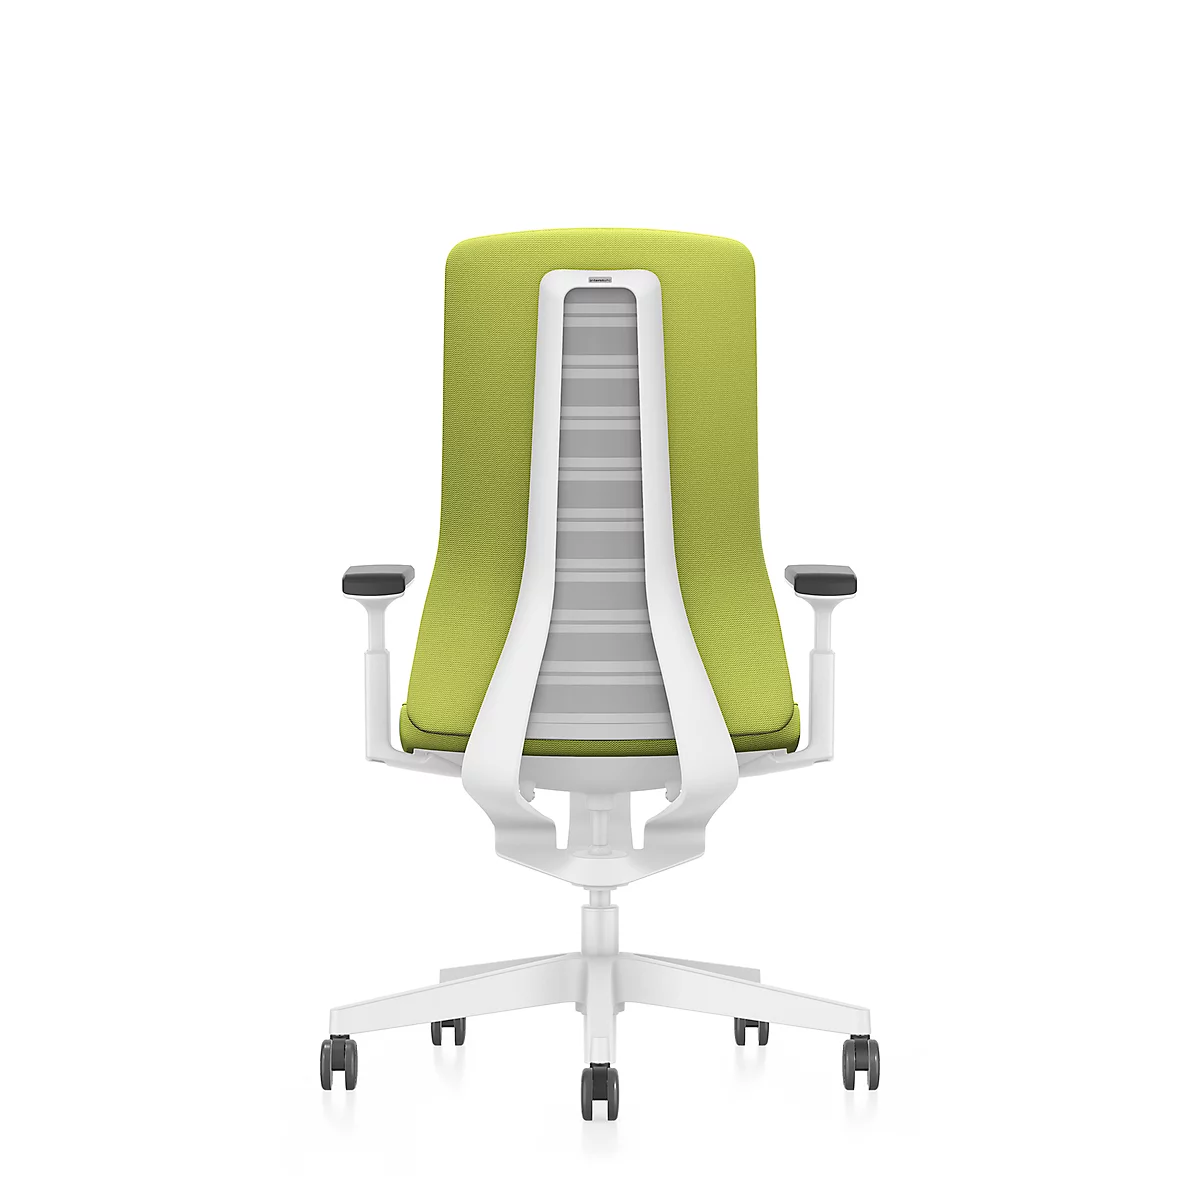 Interstuhl bureaustoel PUREis3, verstelbare armleuningen, 3D auto-synchroonmechanisme, kuipzitting, gestoffeerde rug, meigroen/wit